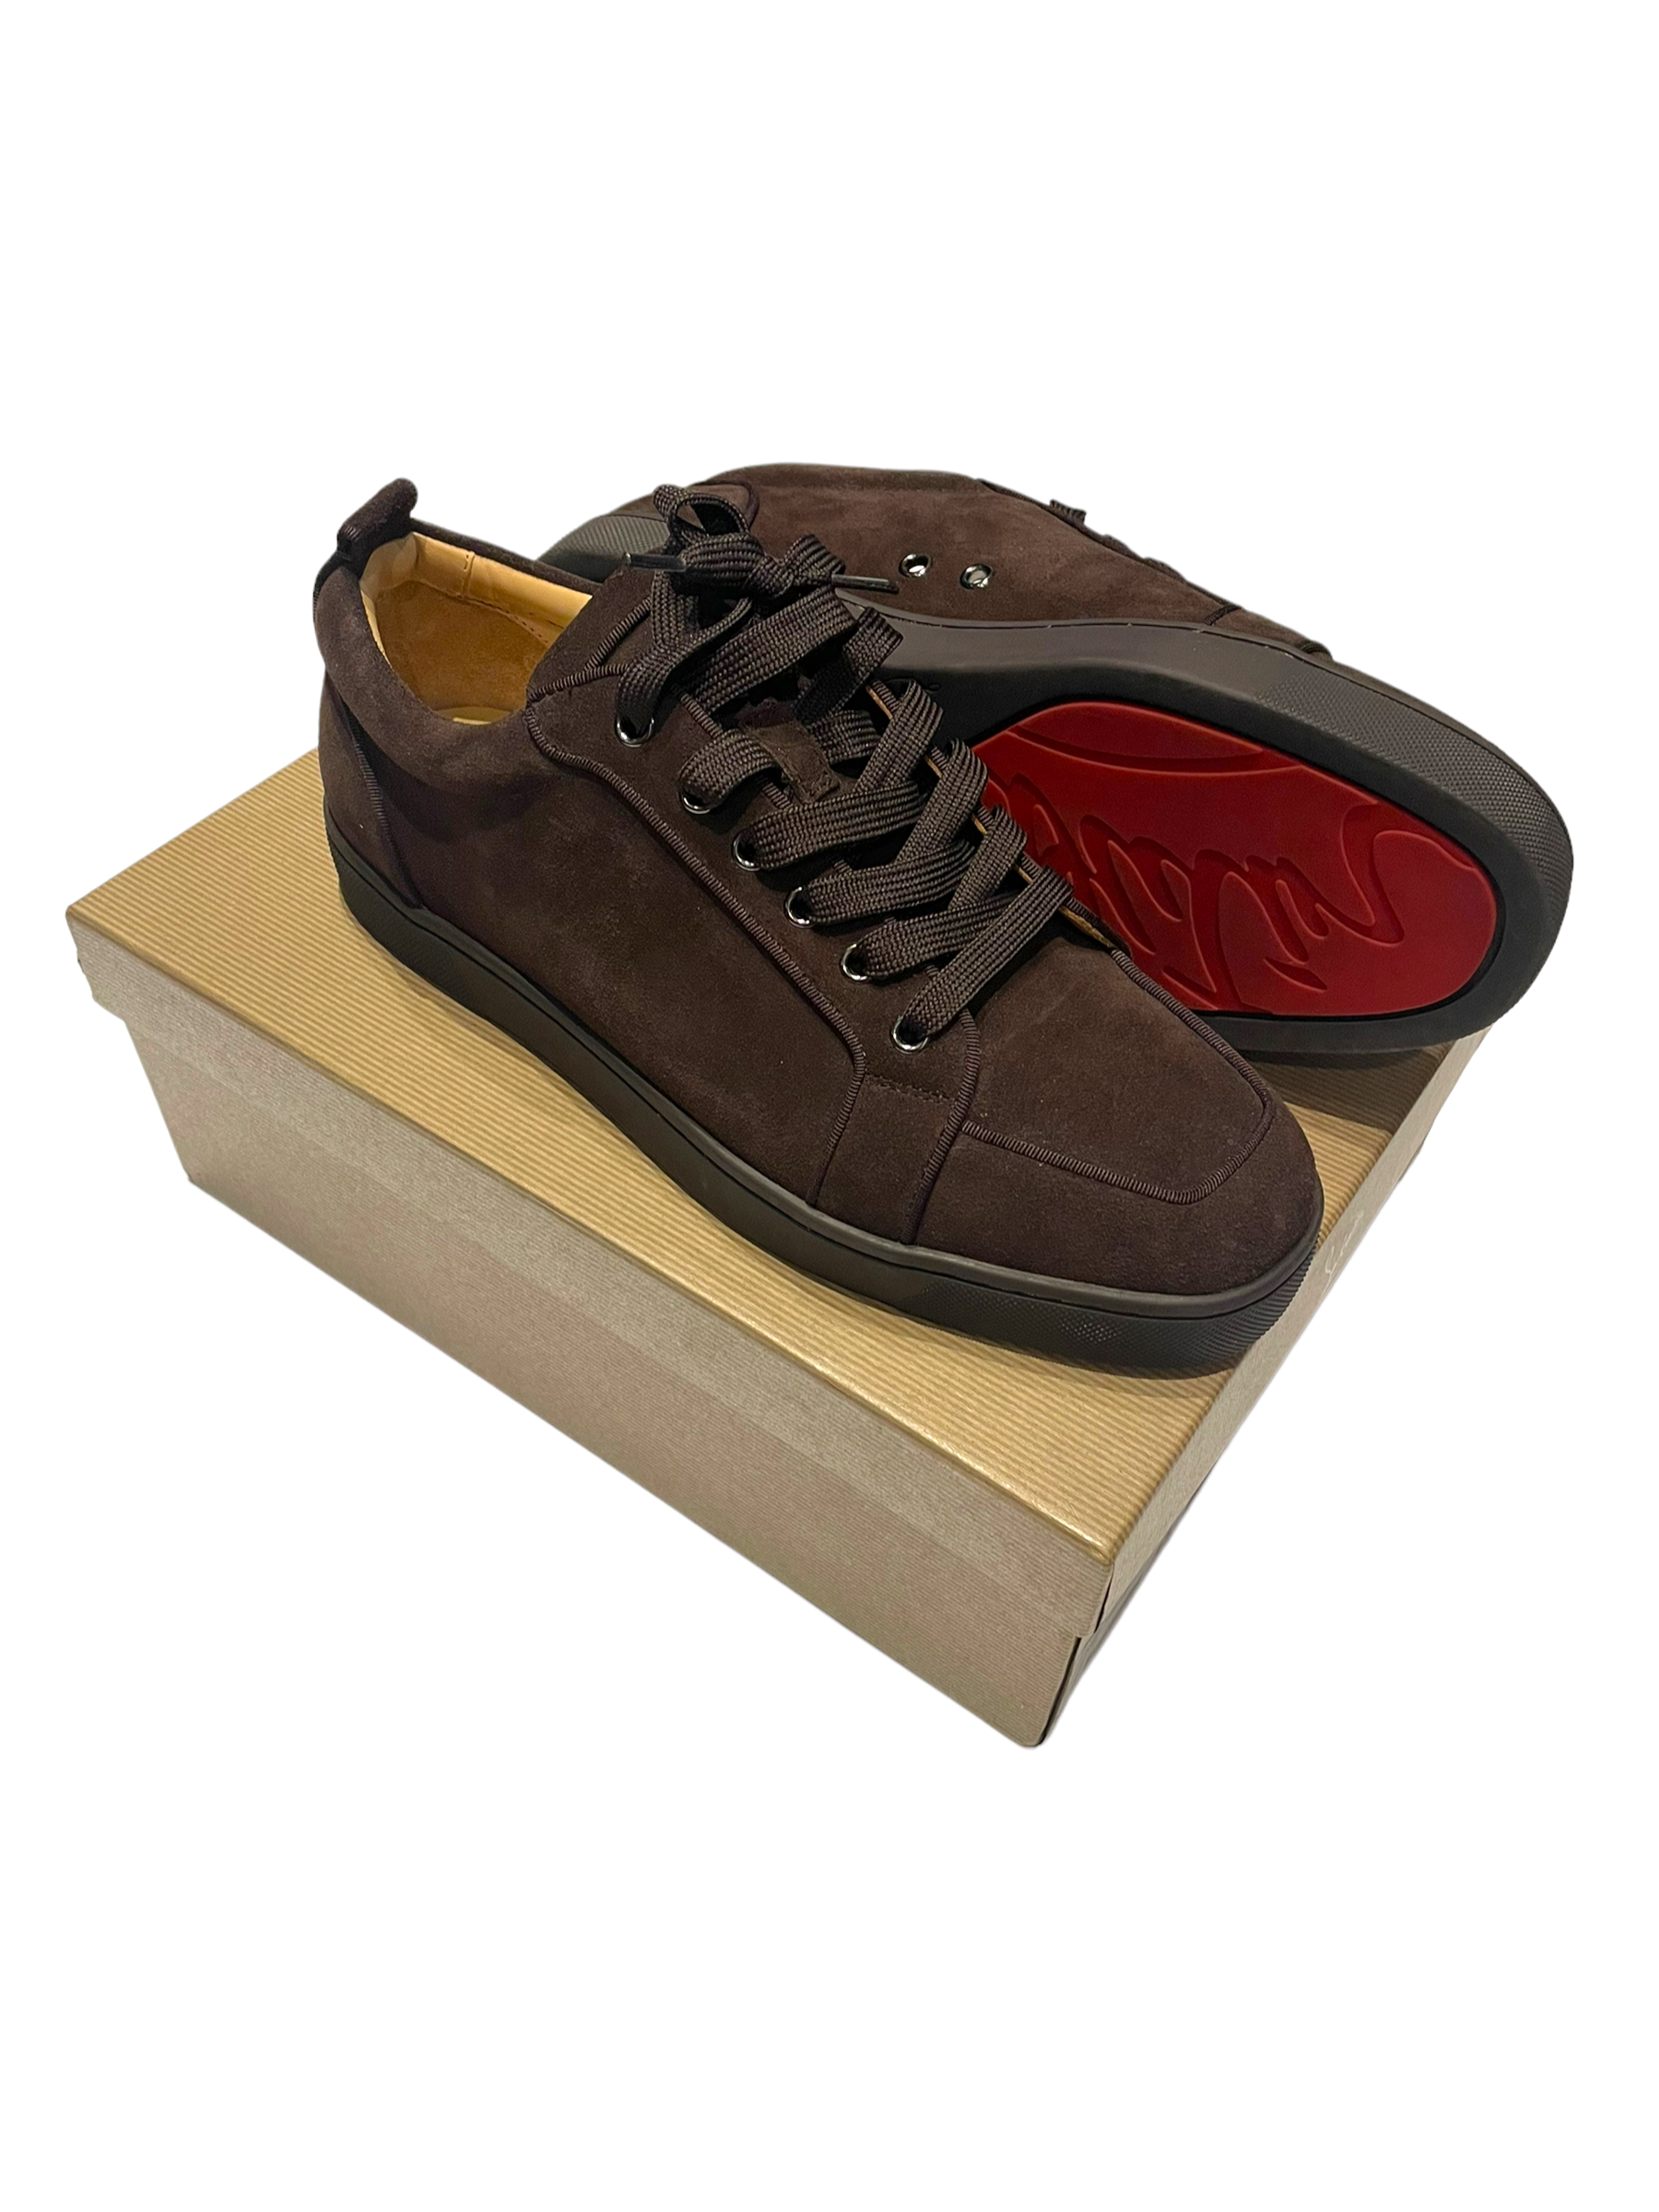 Christian Louboutin, Shoes, Christian Louboutin Red Bottom Flats